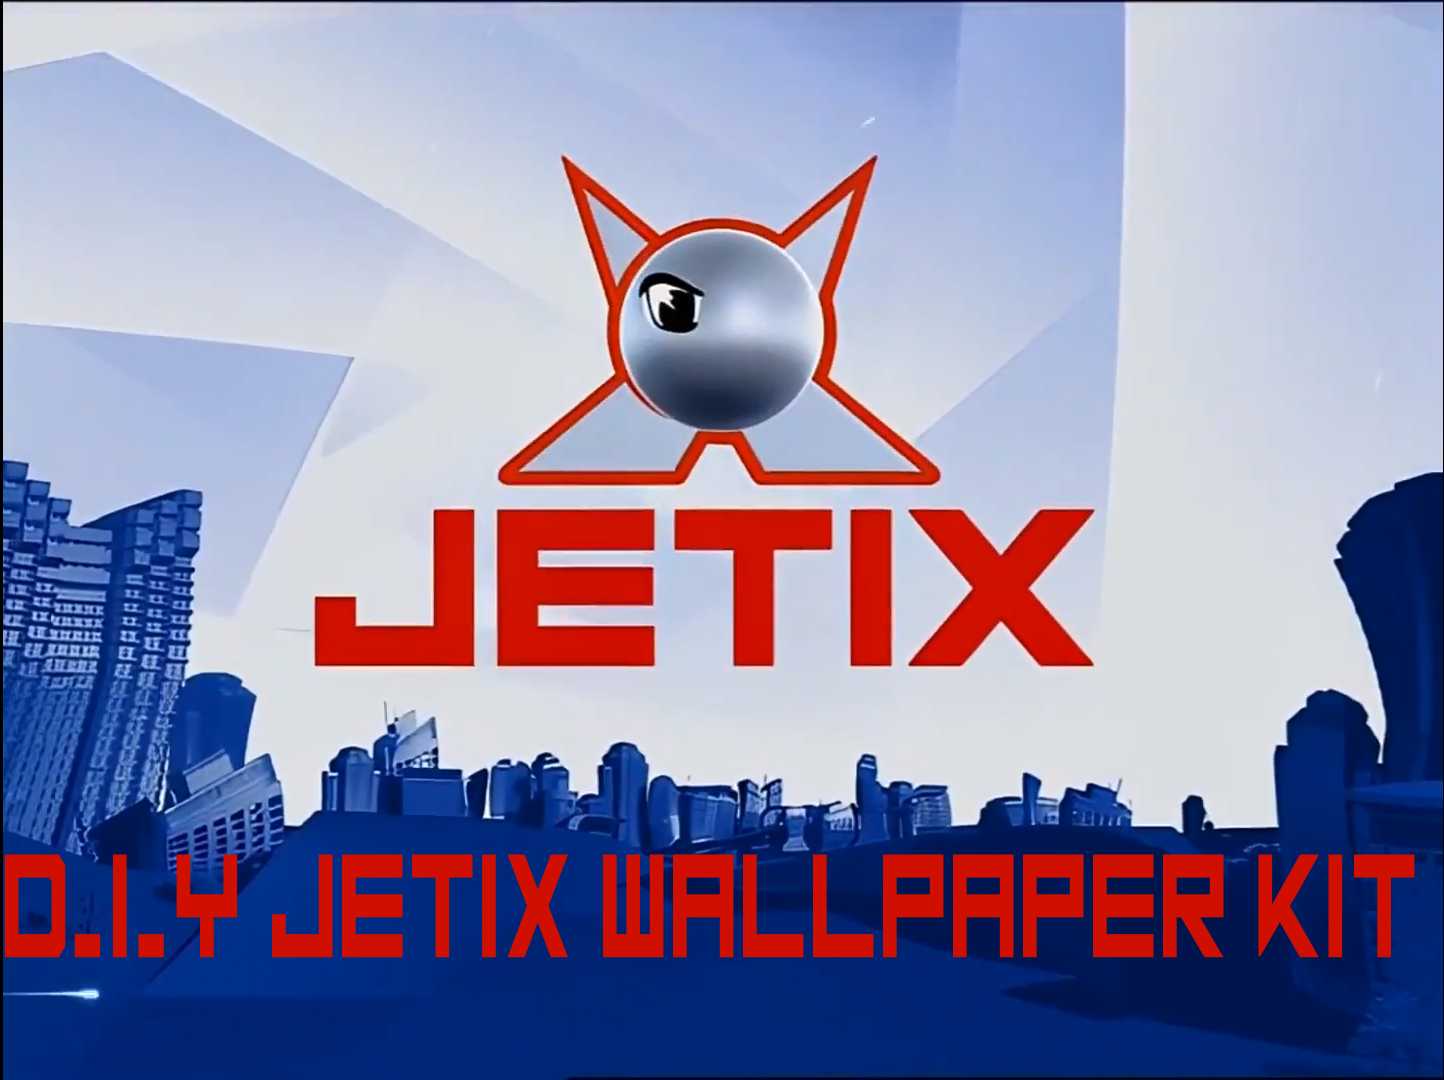 DIY Jetix wallpaper kit download by Kitty-cat-Fox on DeviantArt